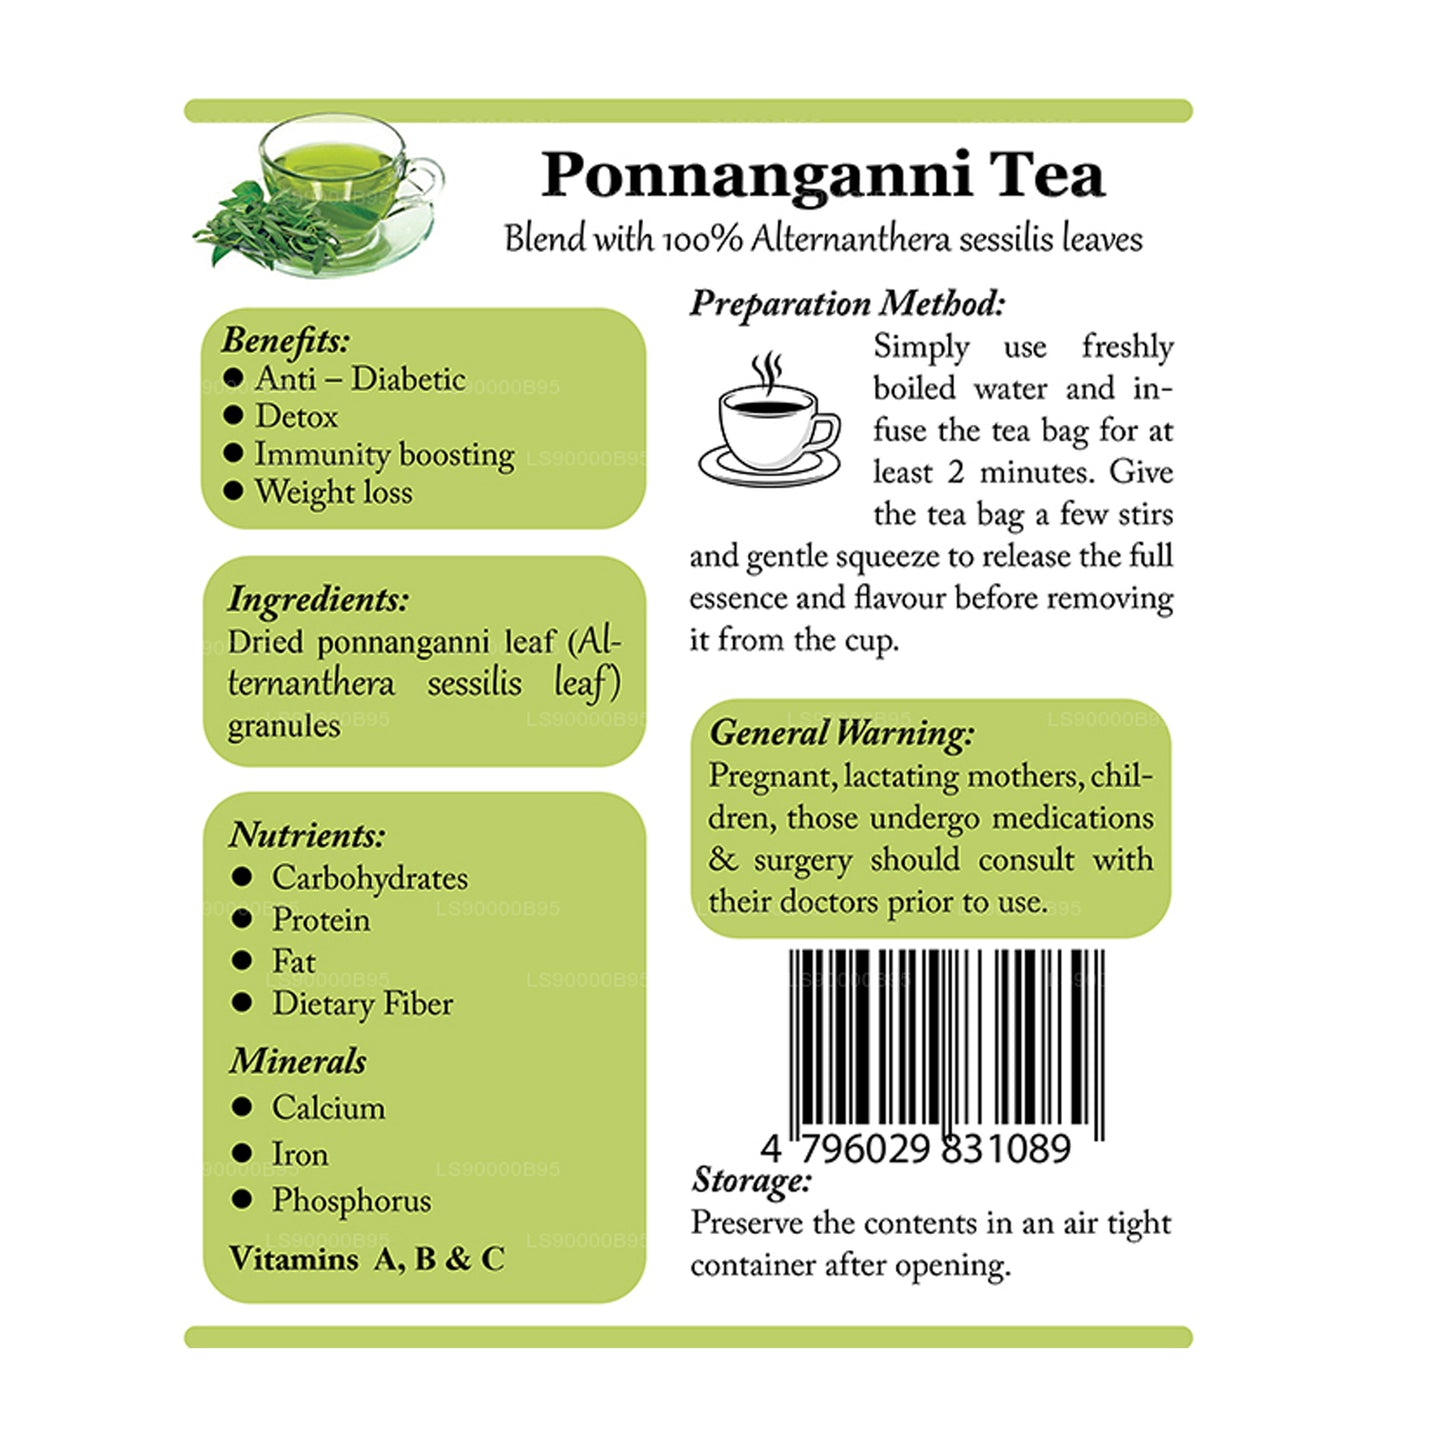 Lifetone Ponnanganni Tea (30g)